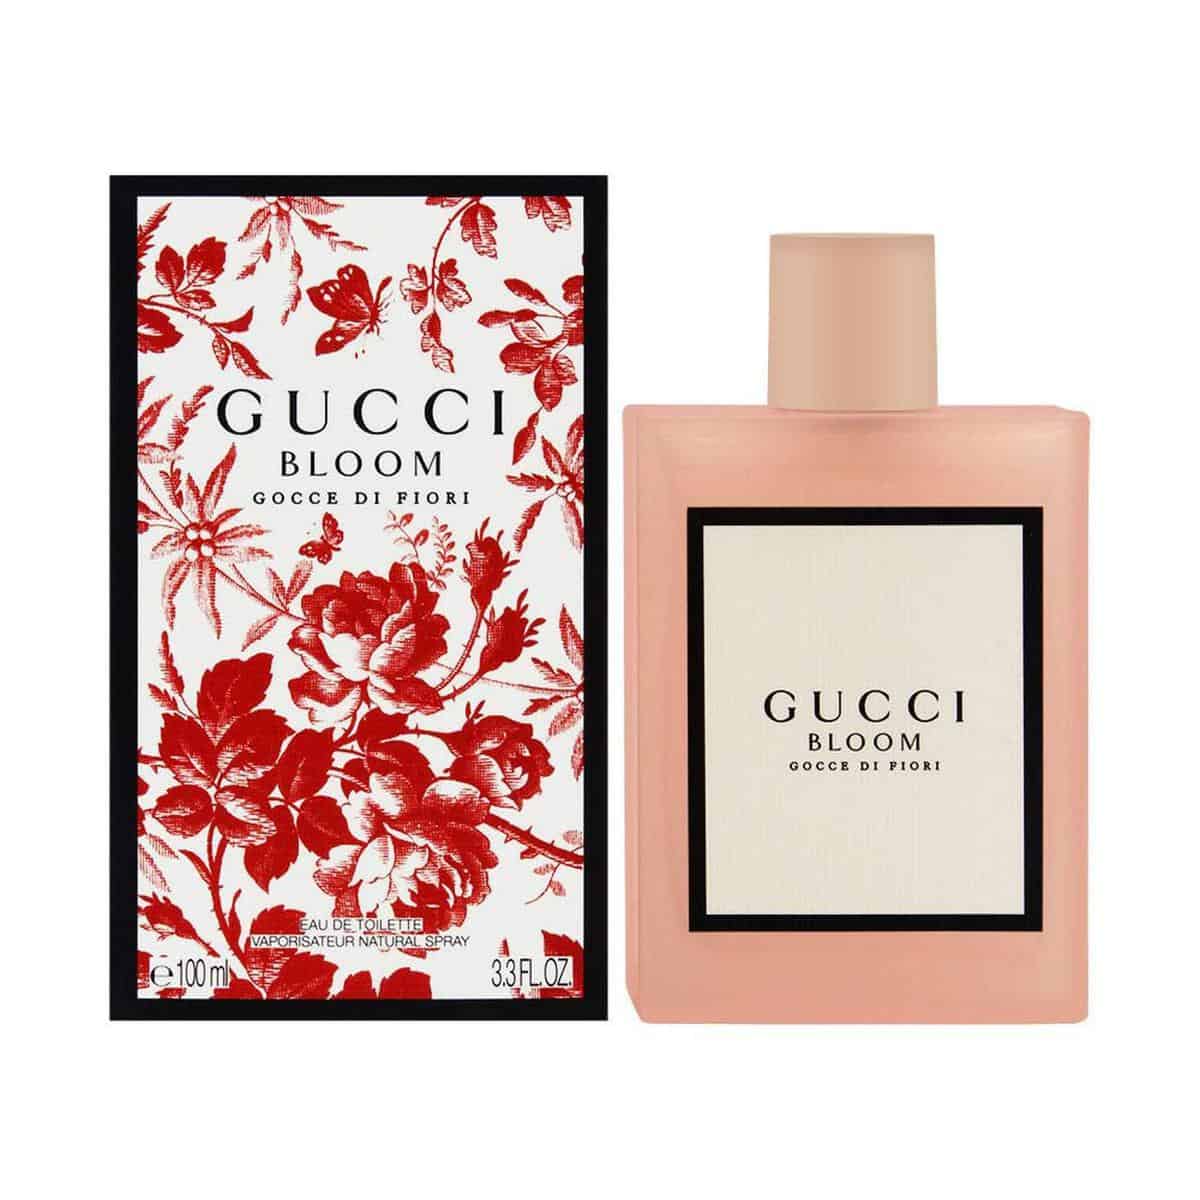 Bloom Gocce di Fiori Eau de Toilette by Gucci